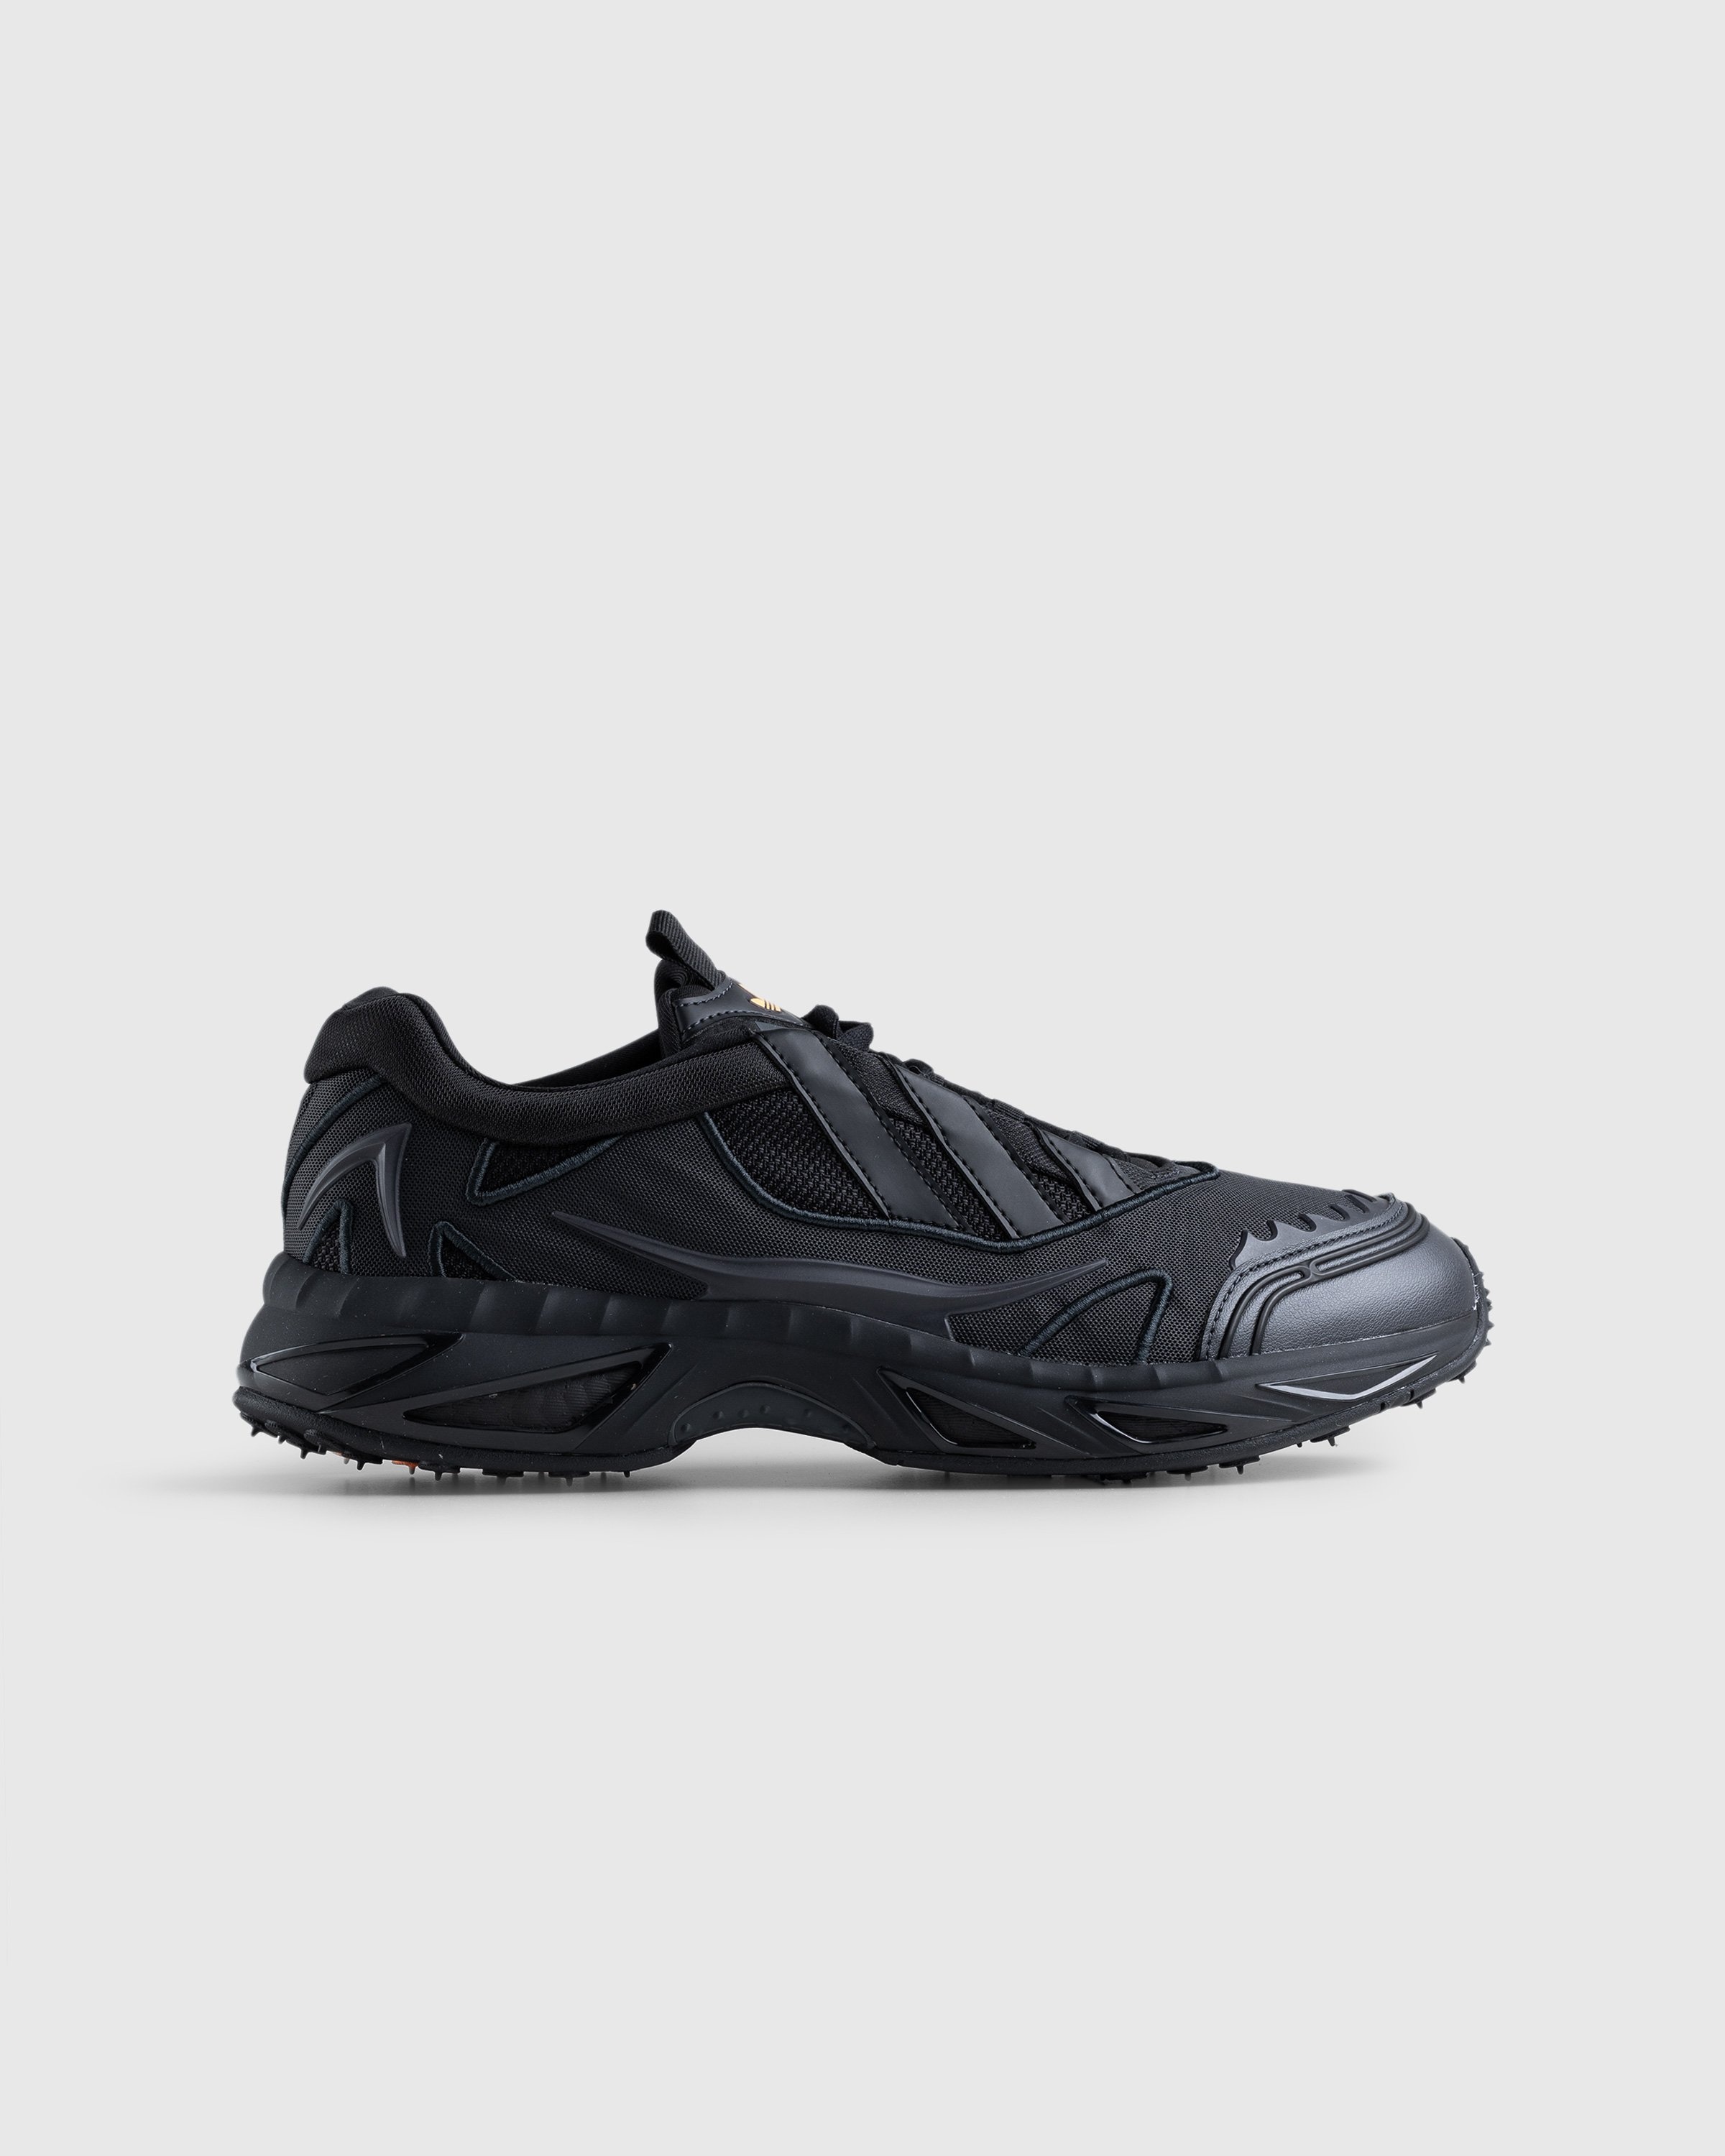 Adidas – Xare Boost Black - Low Top Sneakers - Black - Image 1